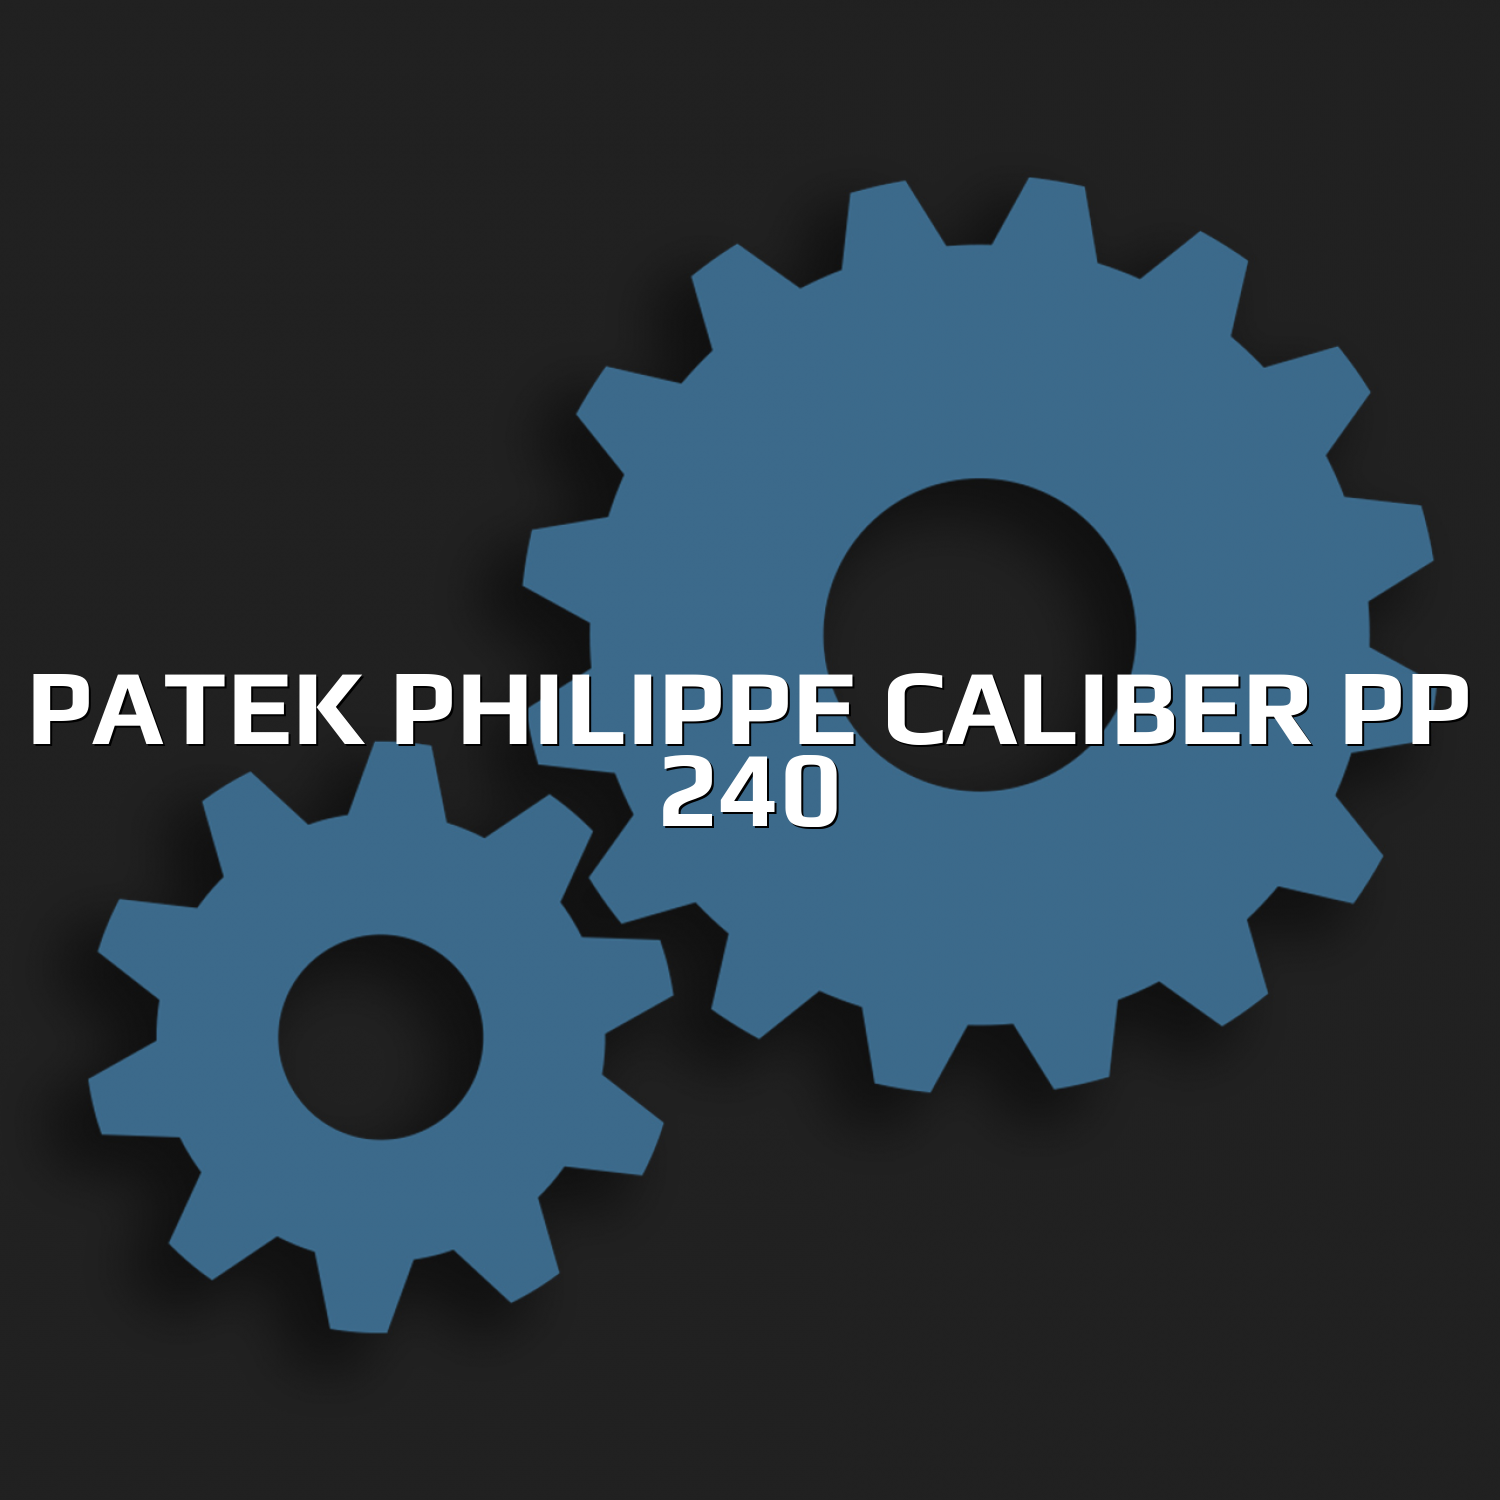 Patek Philippe Caliber PP 240